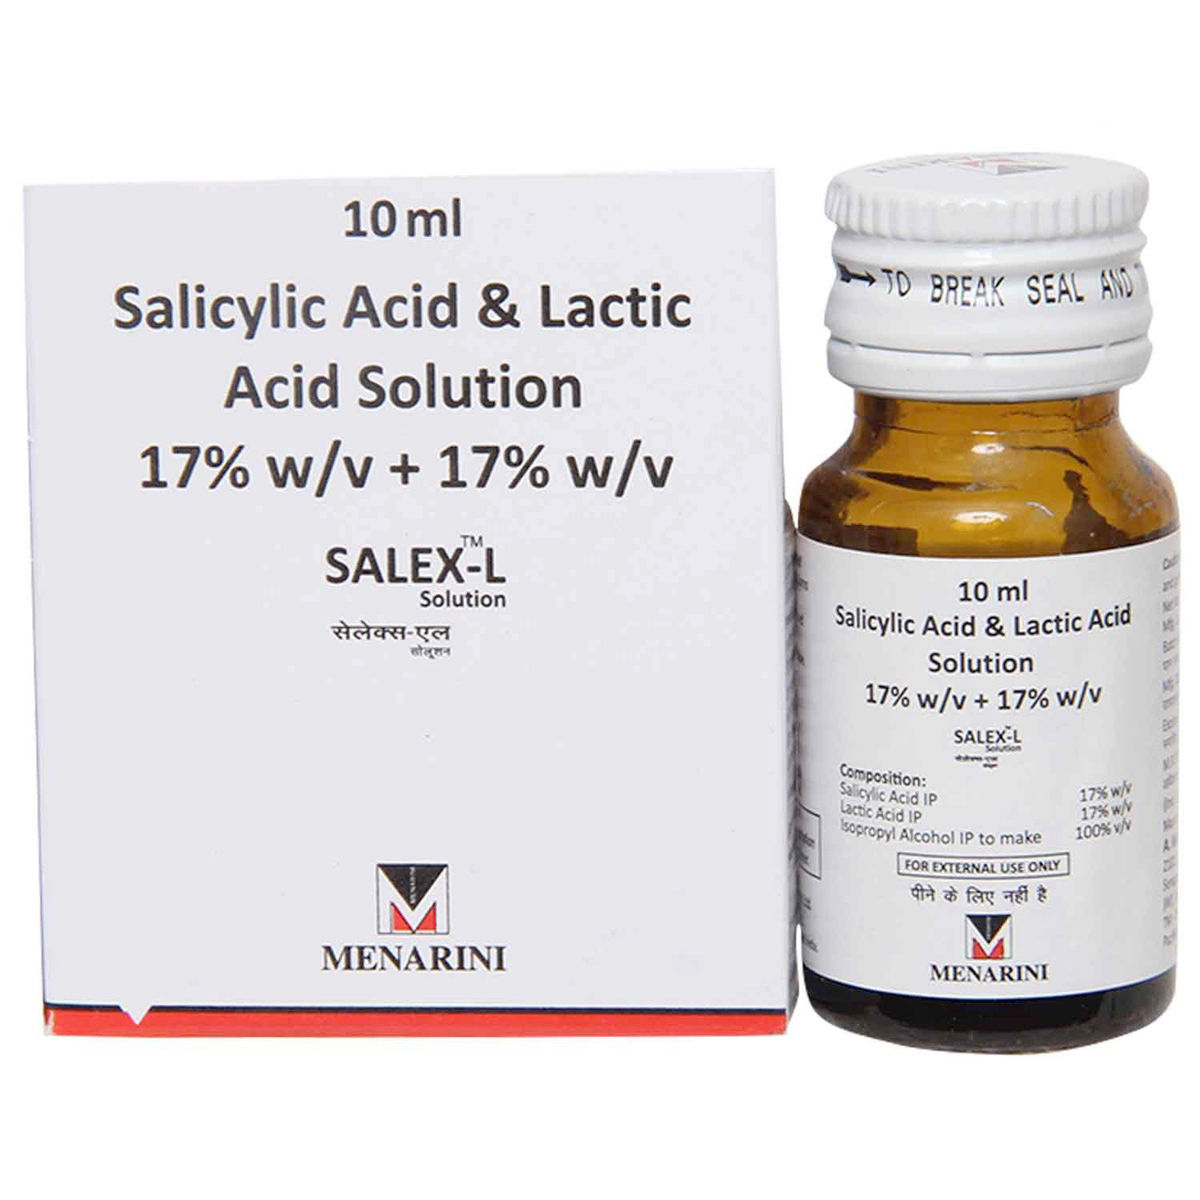 Buy Salex-L Solution 10 ml Online